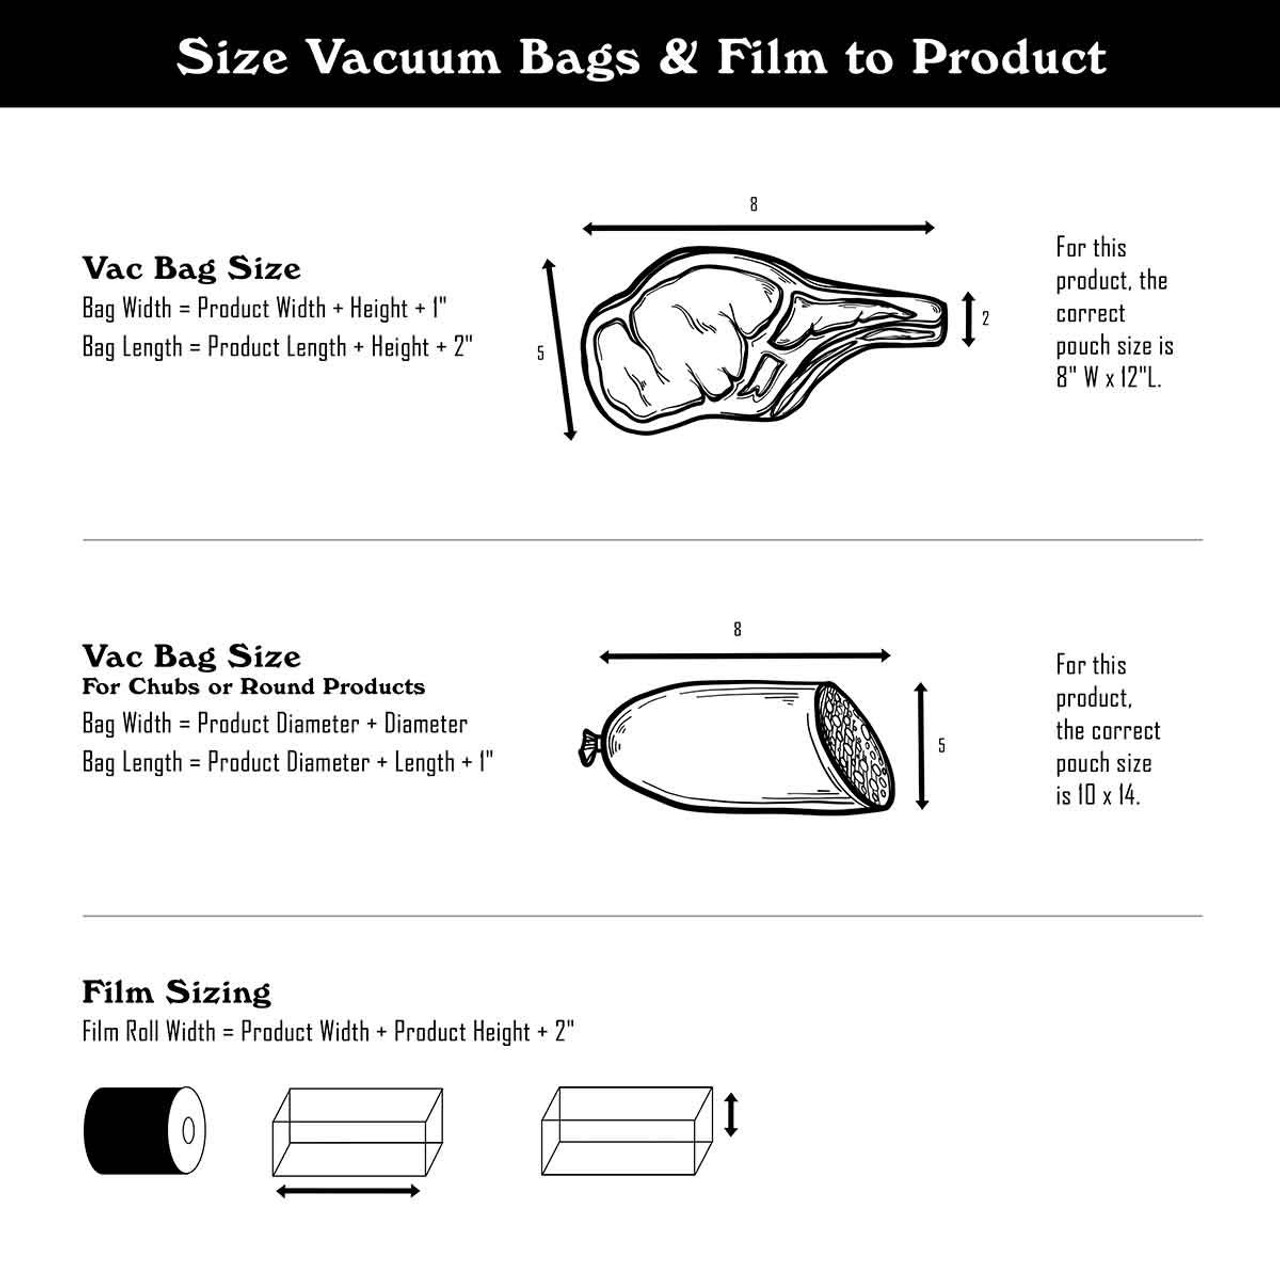 W&Y Vacuum Sealer Bags for Food - 100 Quart, 8 x 12 Commercial